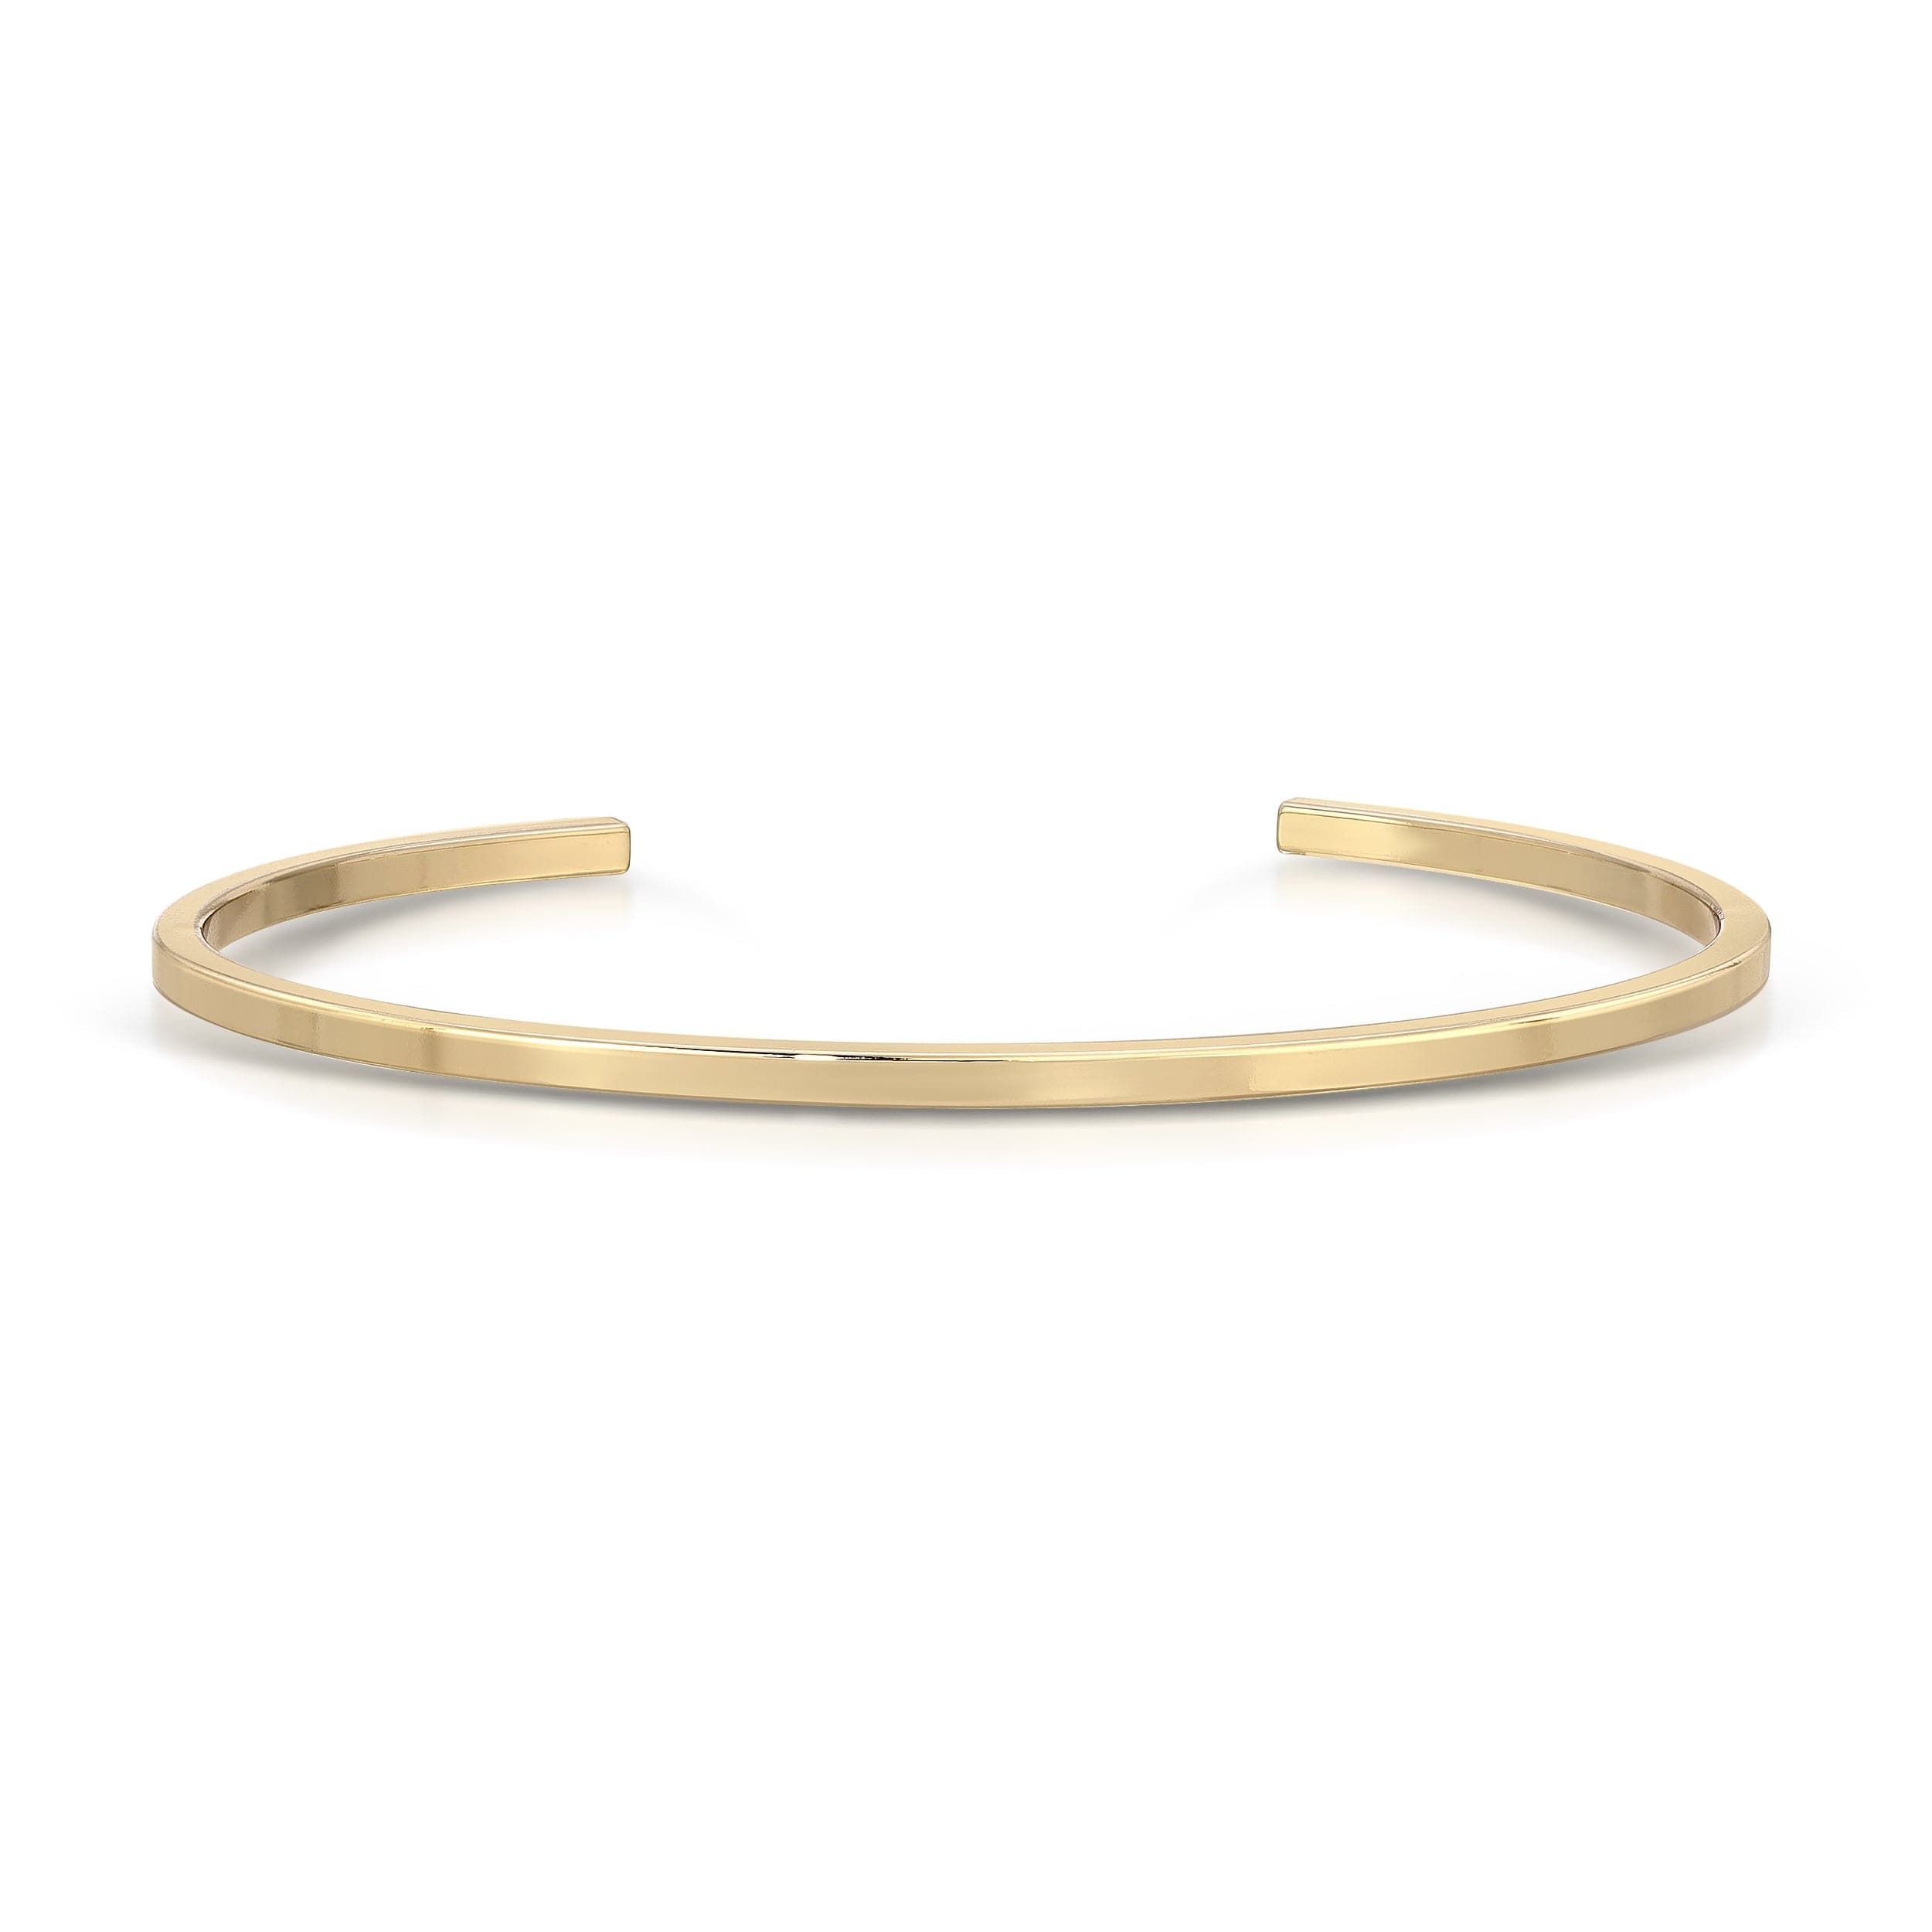 a gold cuff bracelet on a white background